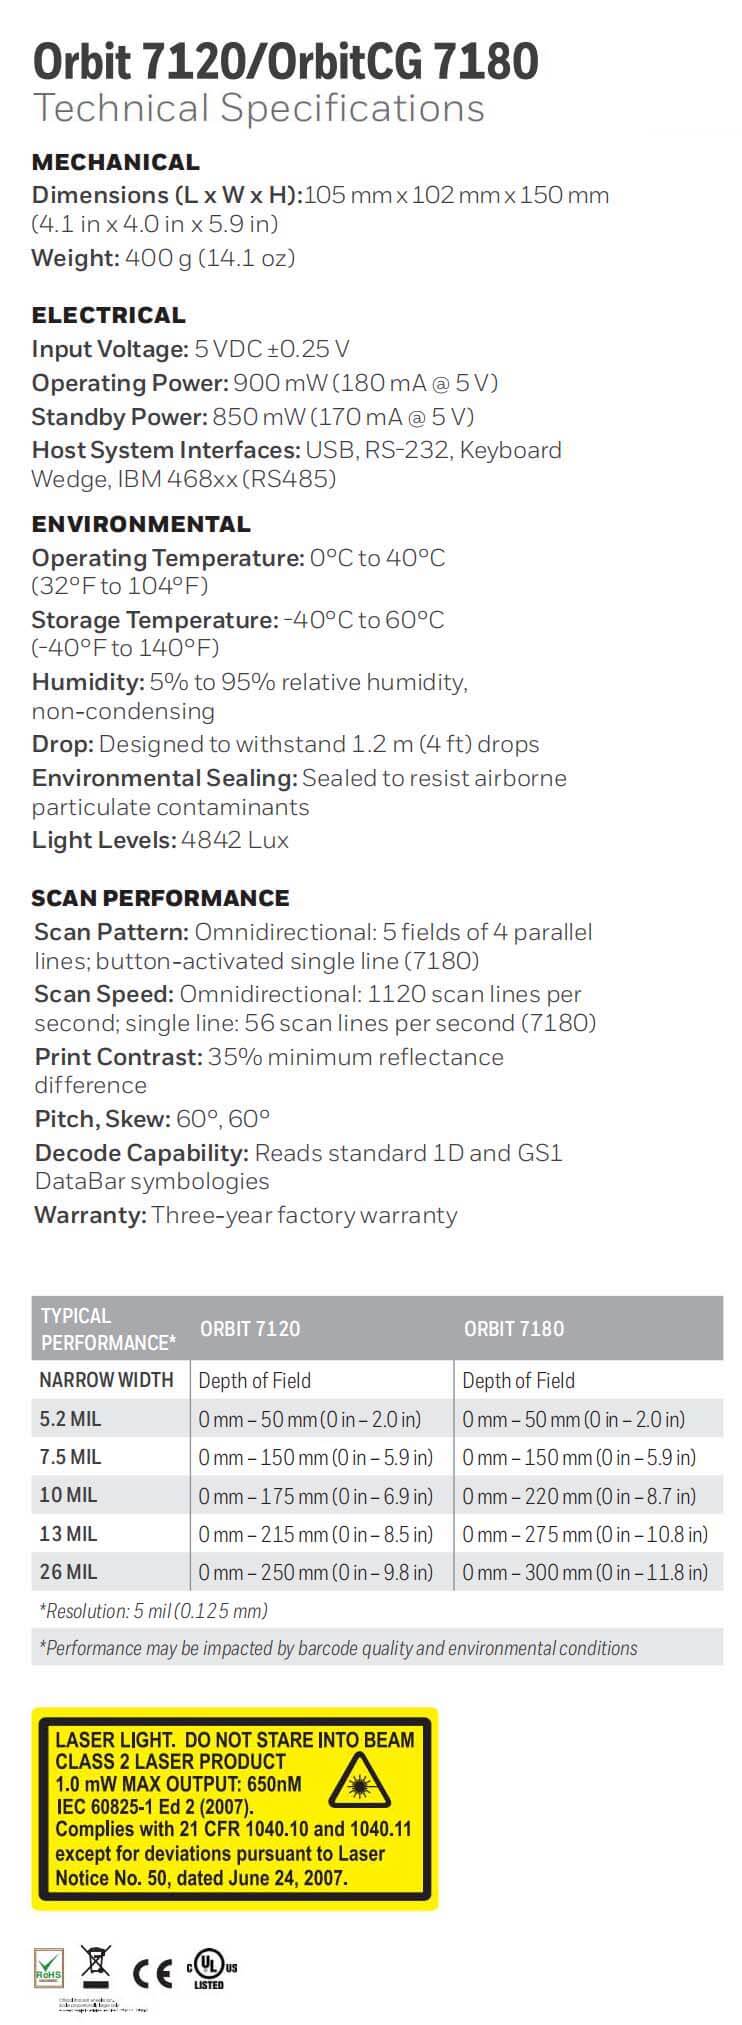 Honeywell Orbit 7120 Hands-Free Scanner data sheet